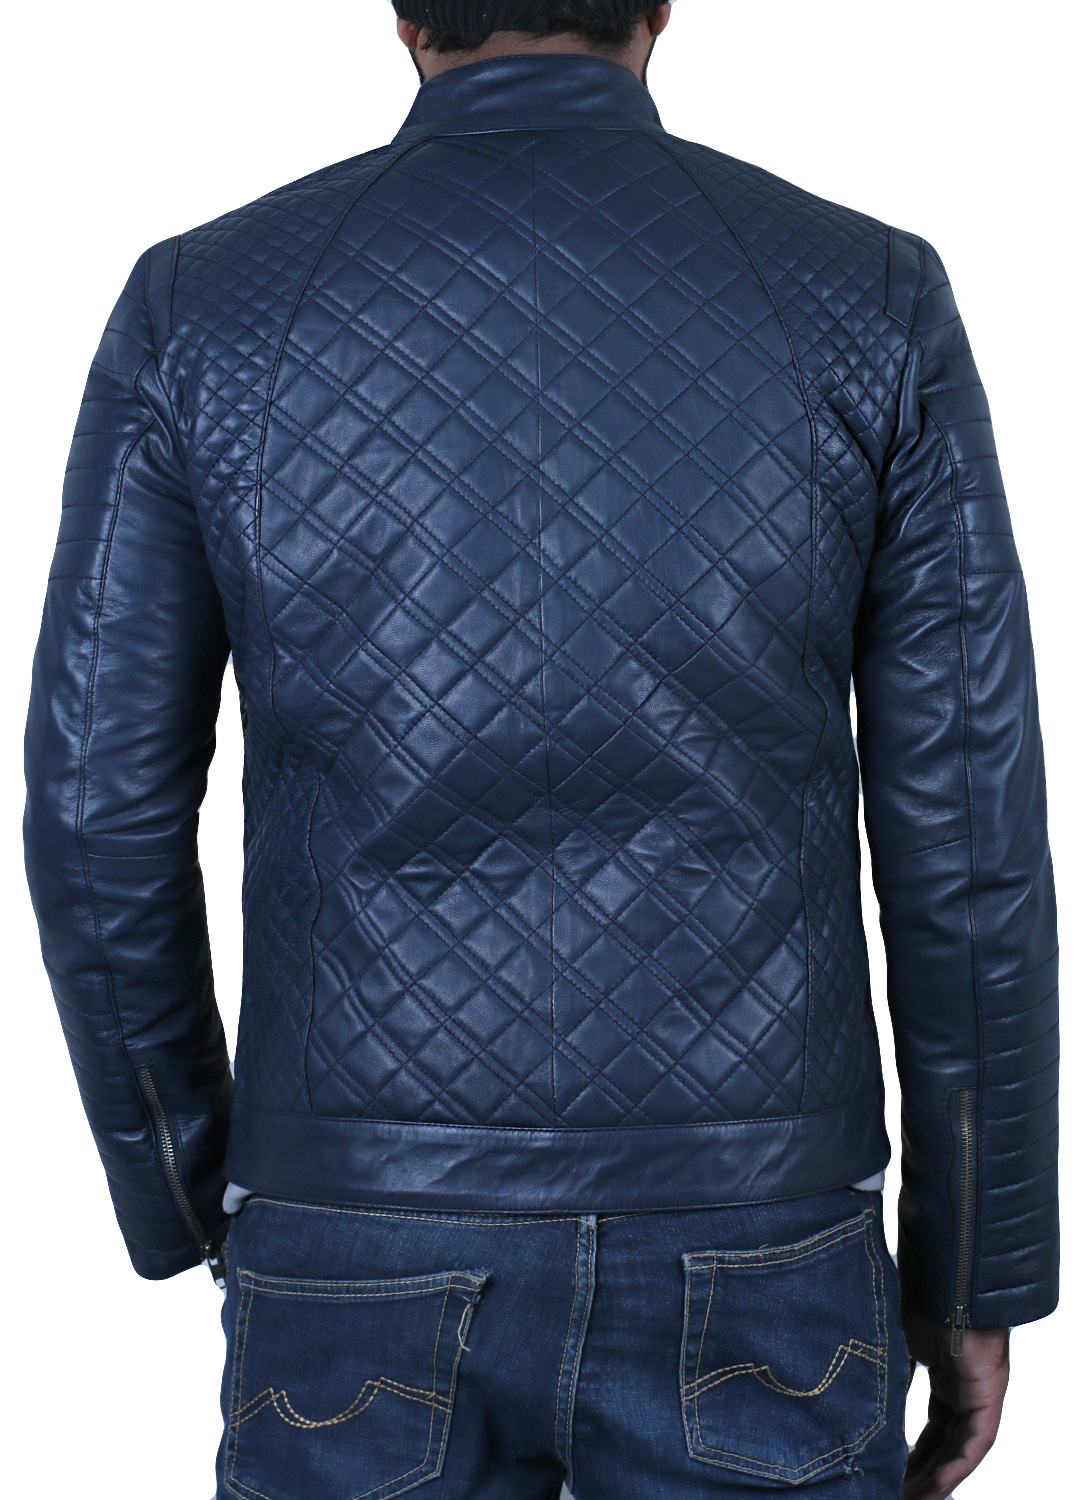 Black, Quilted Jacket Laverapelle Mens Genuine Lambskin Leather Jacket 1501491 